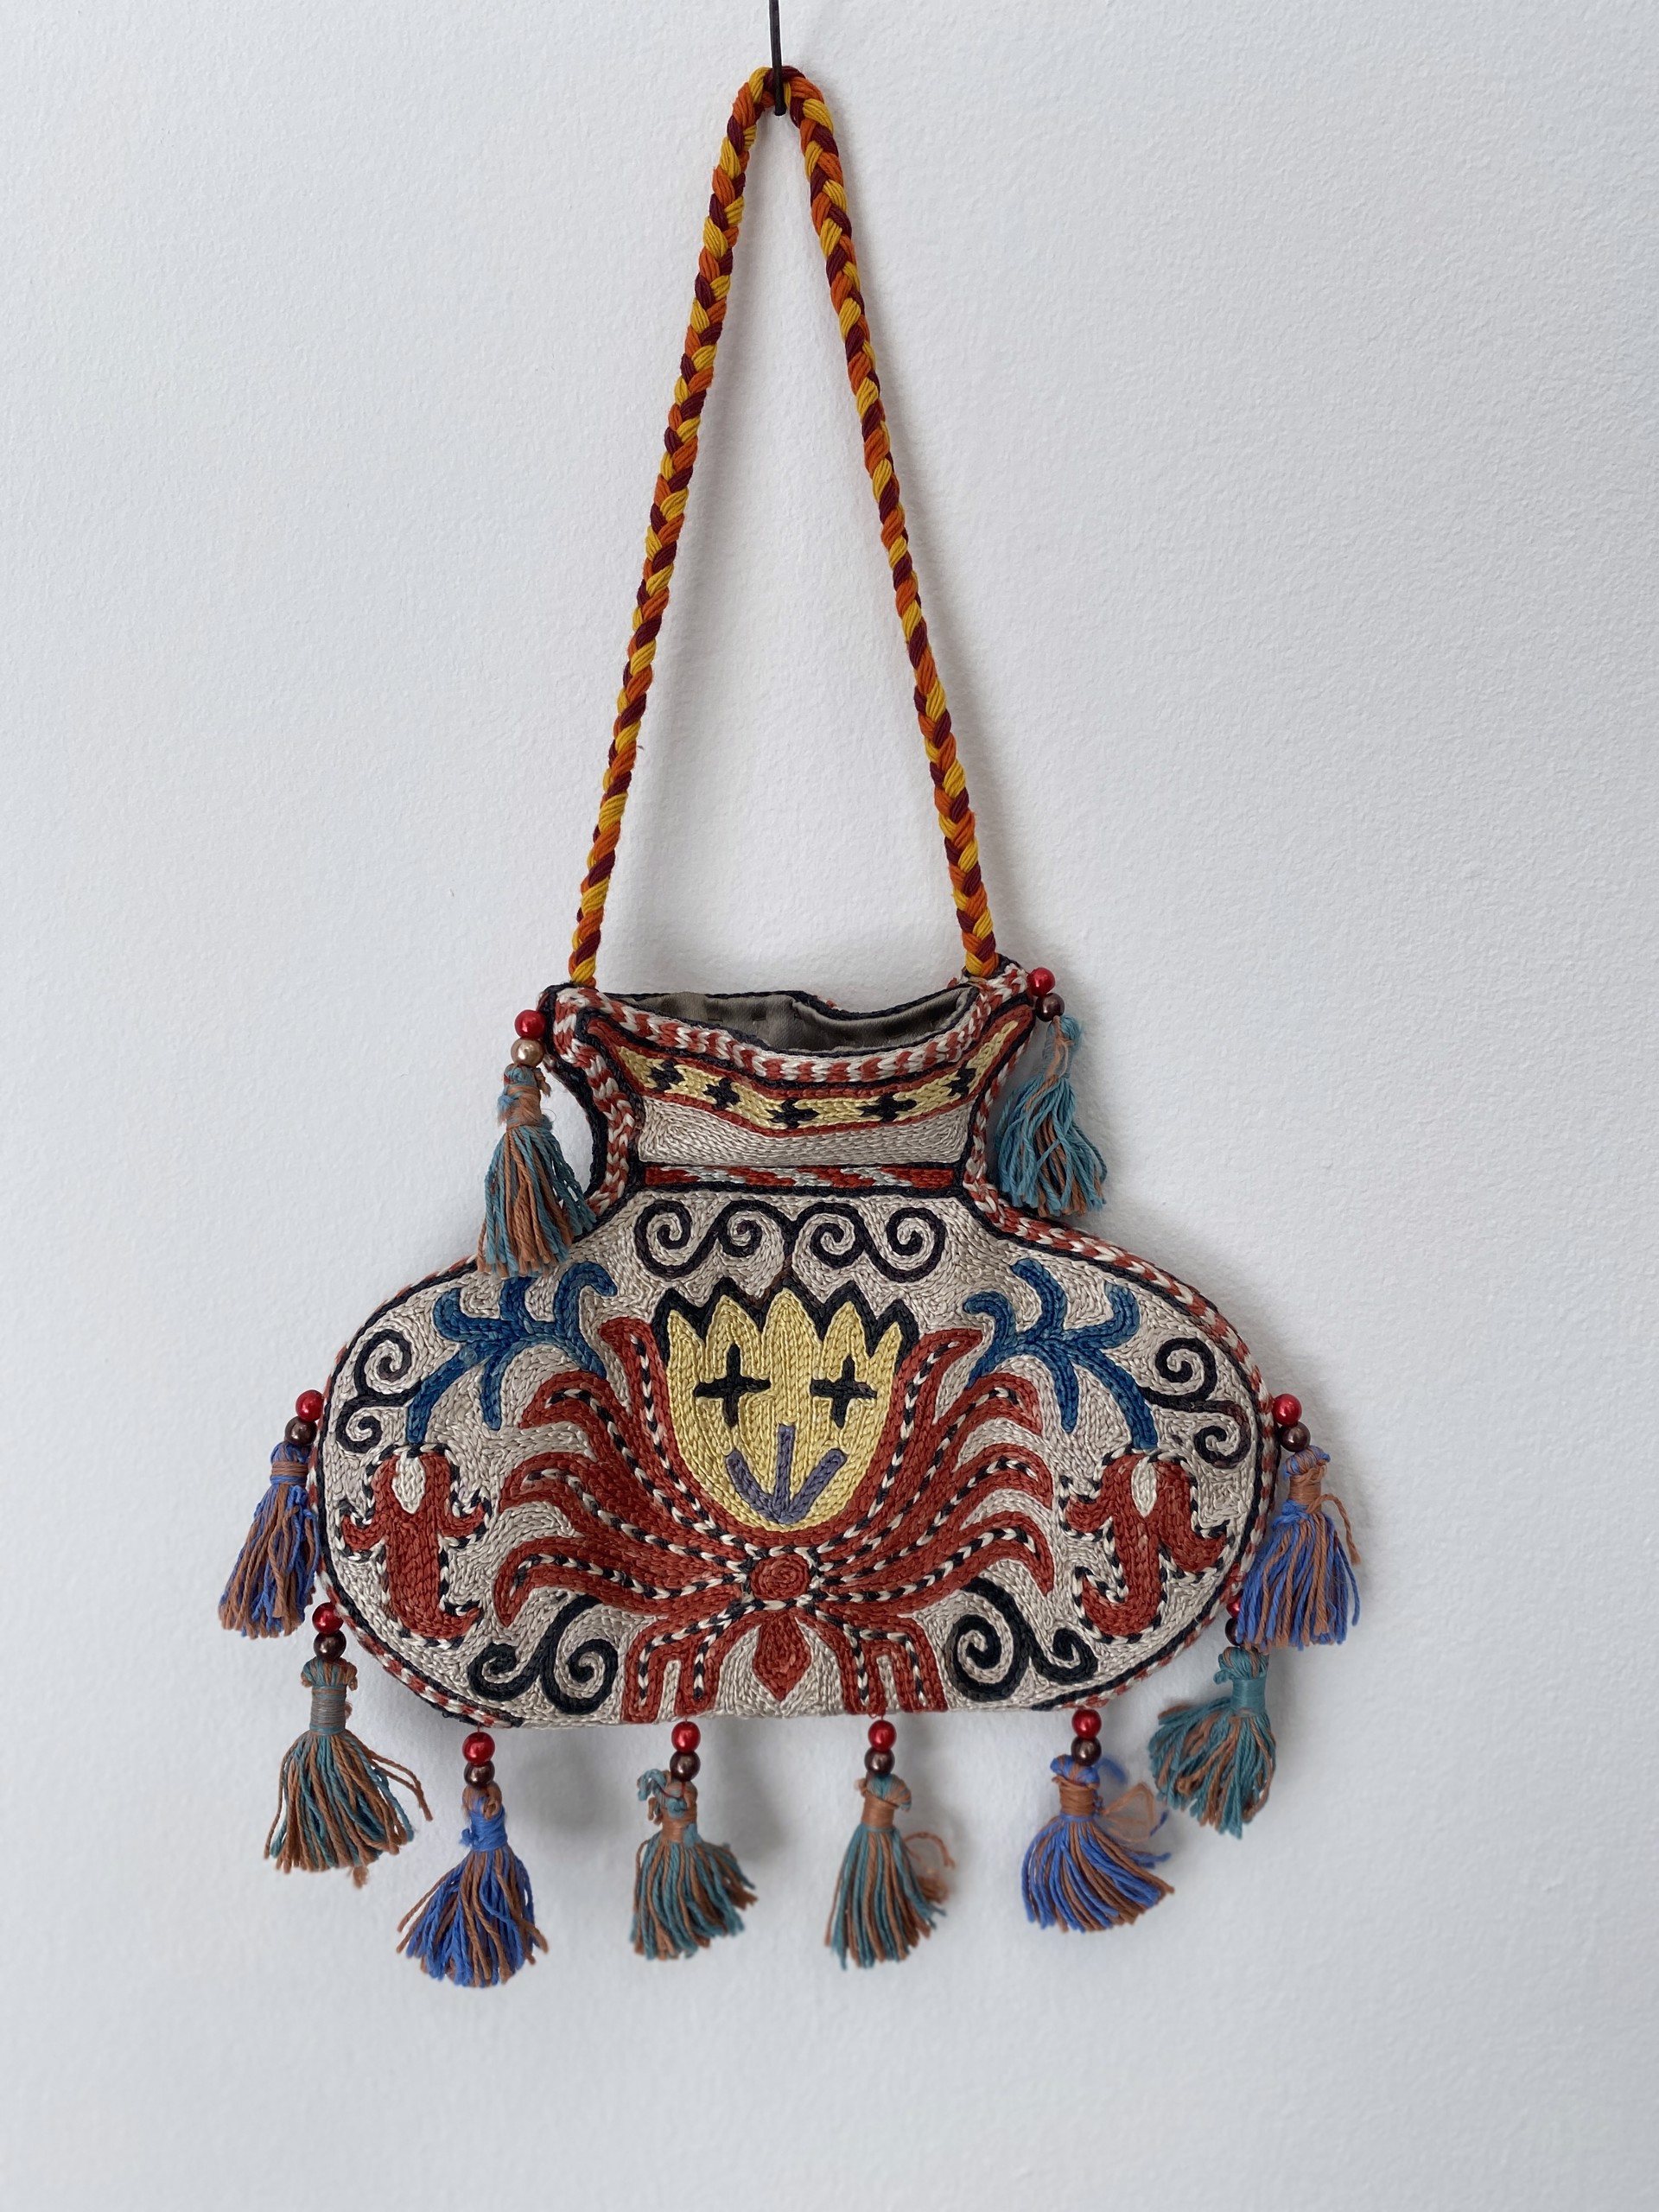 Woven Treasure Bag by Sanjar Nazarov